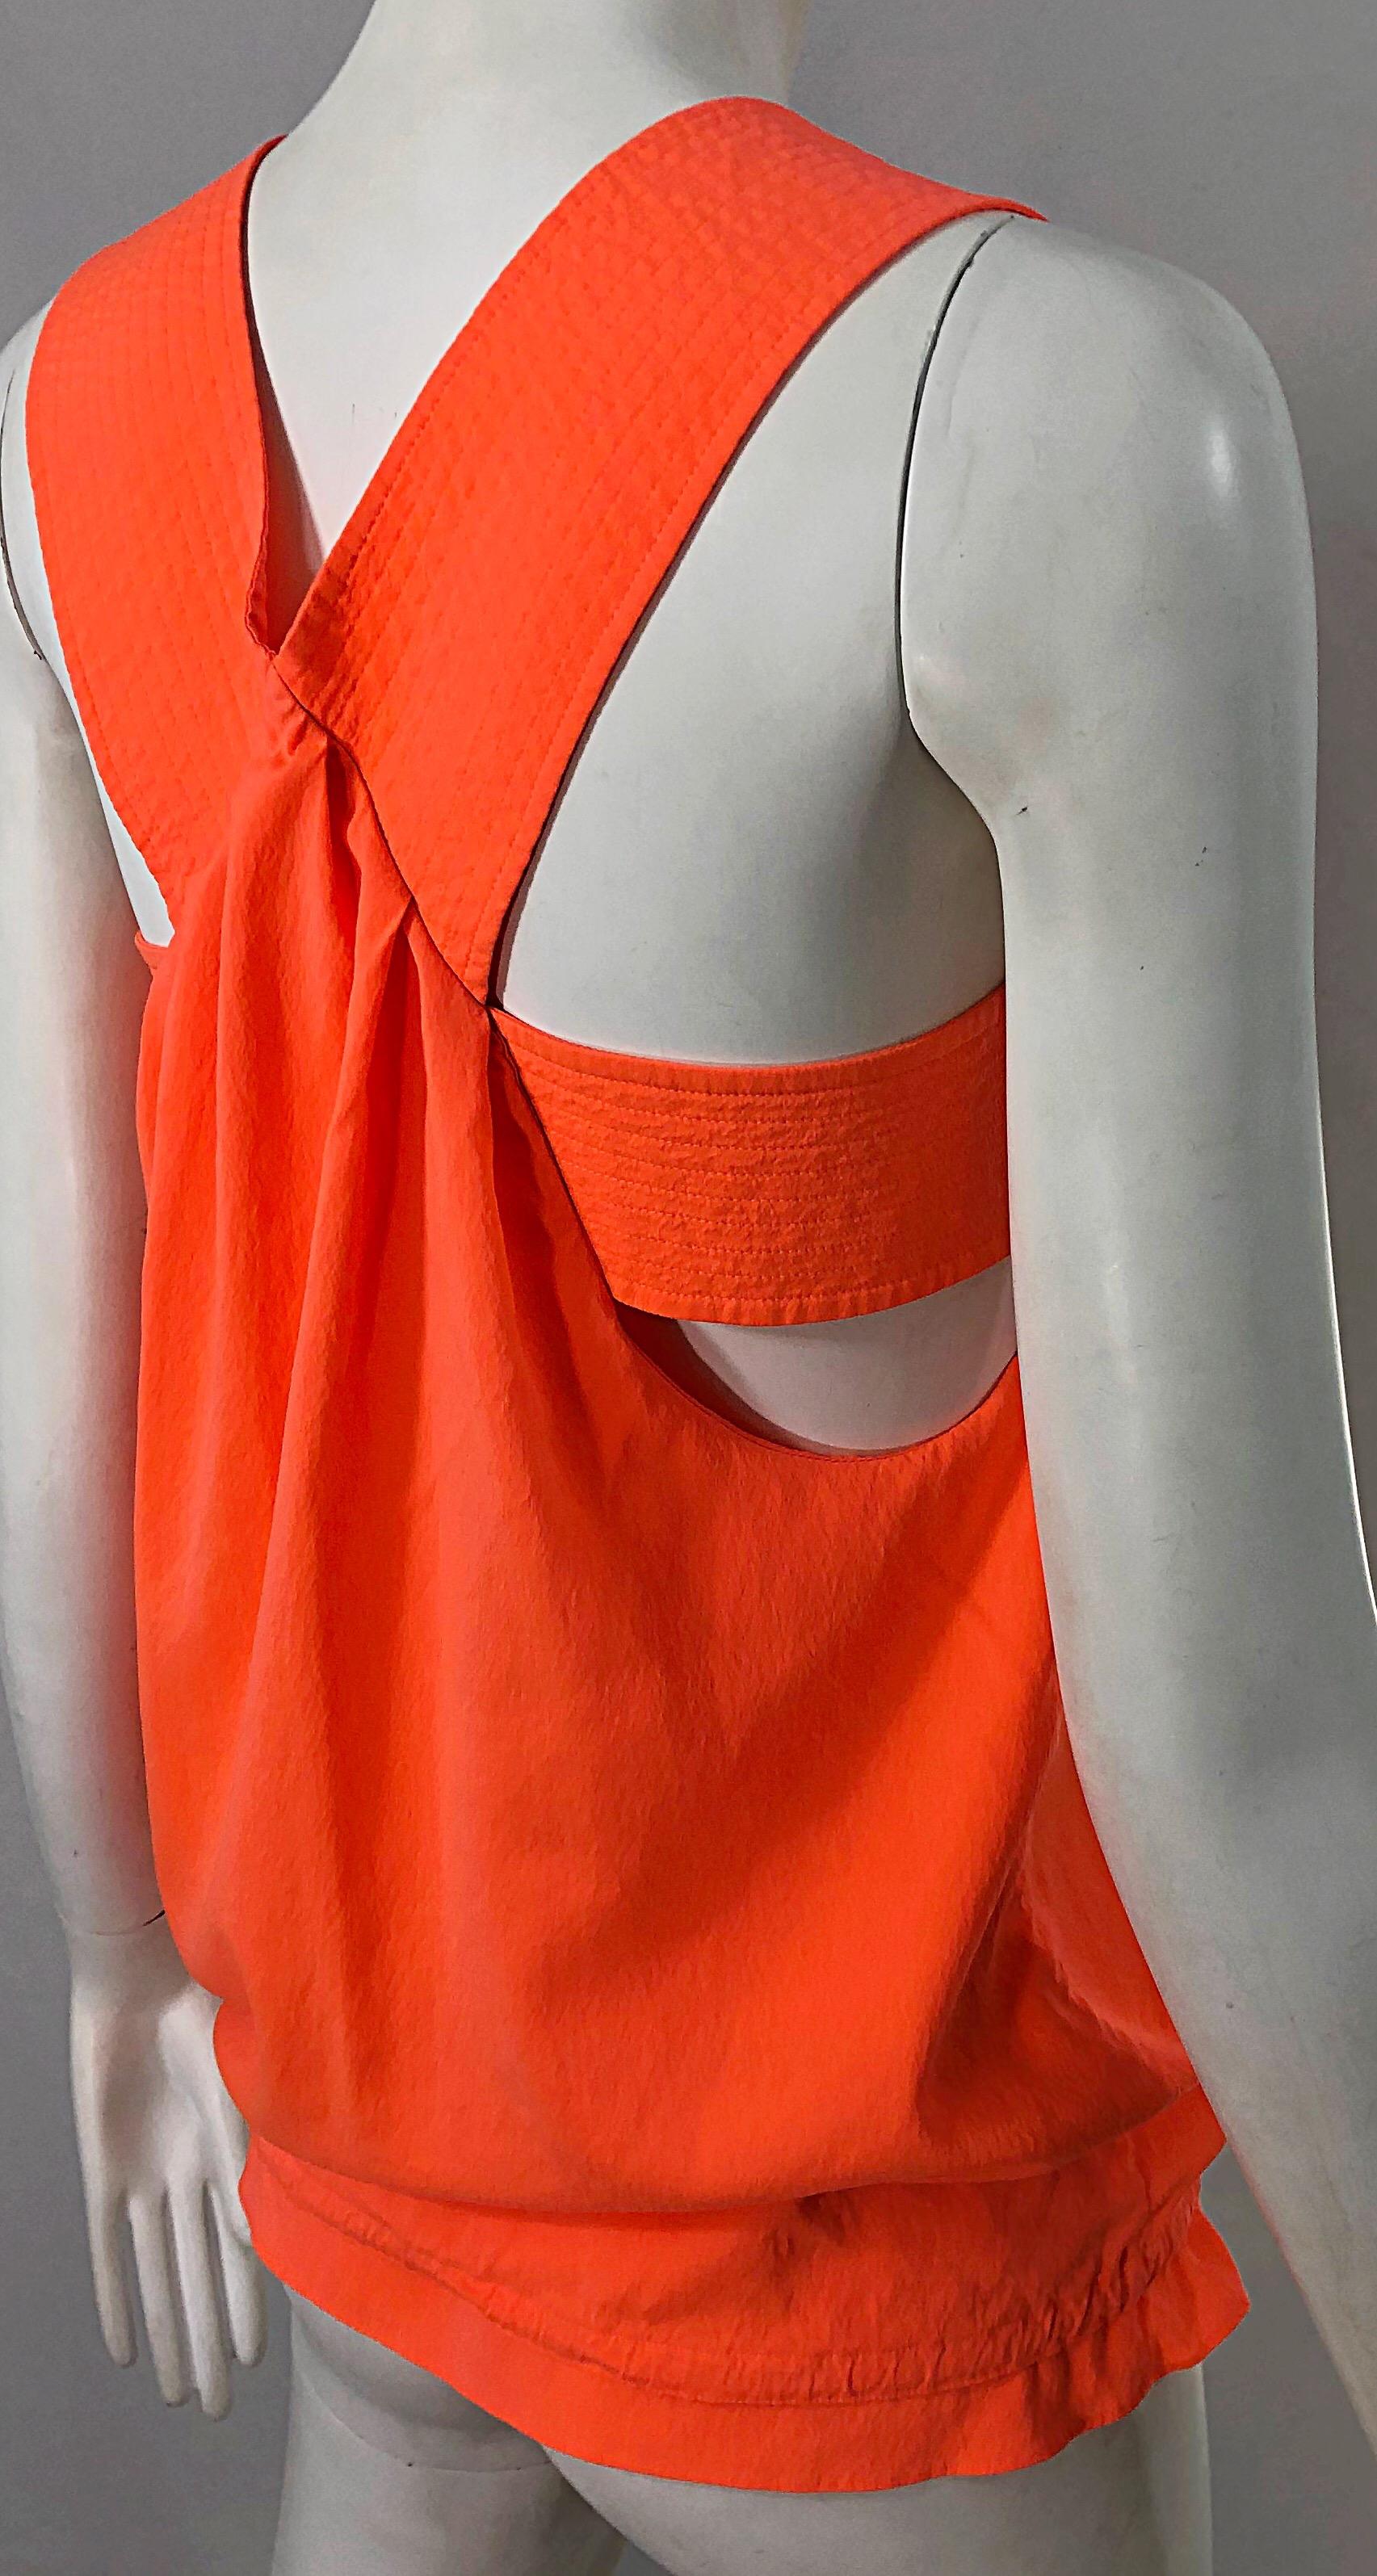 Chloe Spring Summer 2013 Clare Waight Keller Orange Fizz Sleeveless Silk Top  For Sale 3